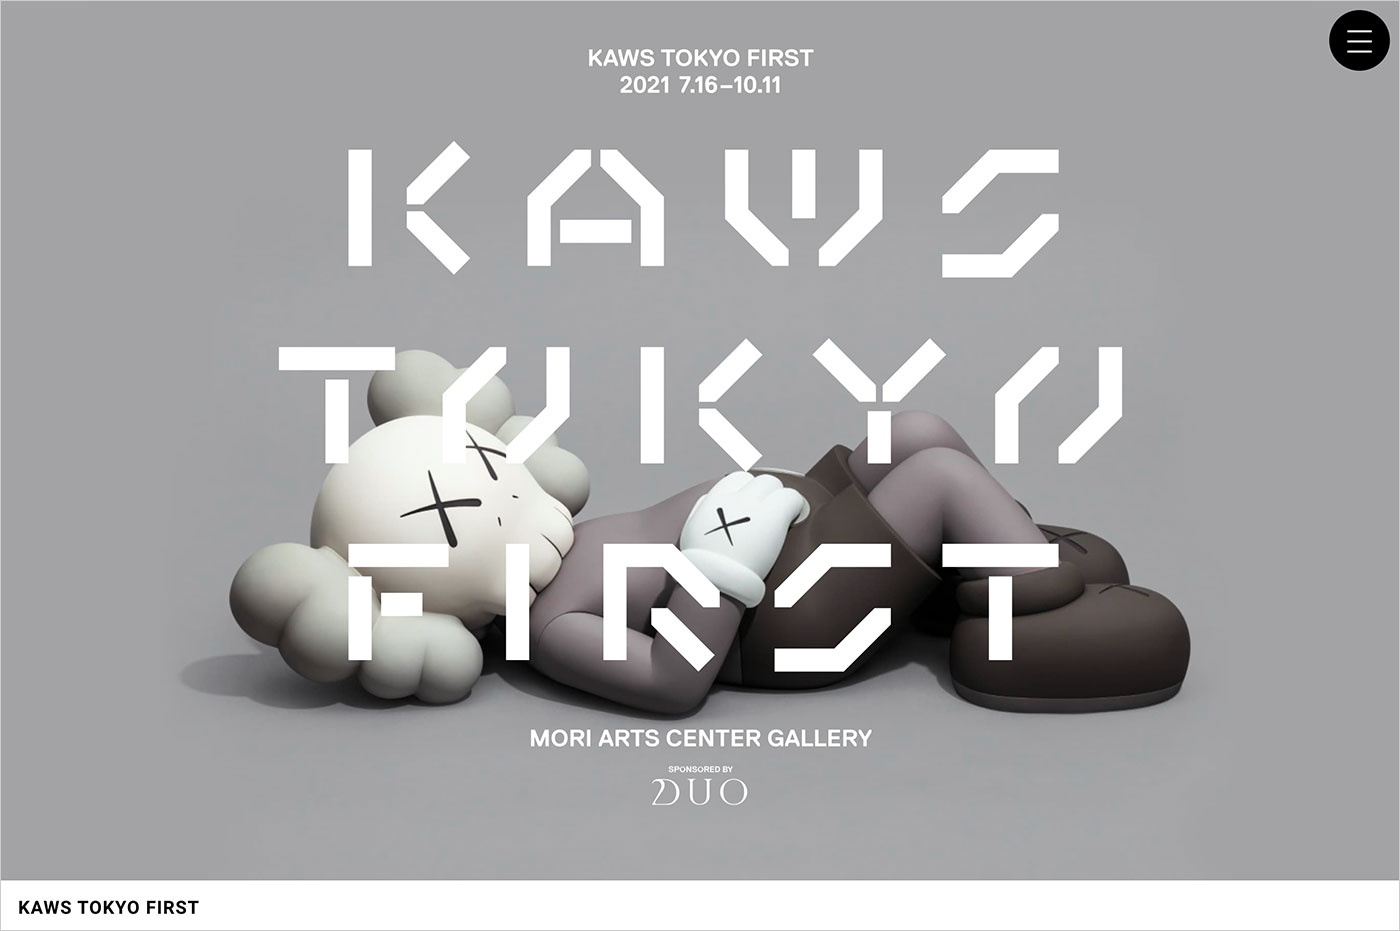 KAWS TOKYO FIRSTウェブサイトの画面キャプチャ画像